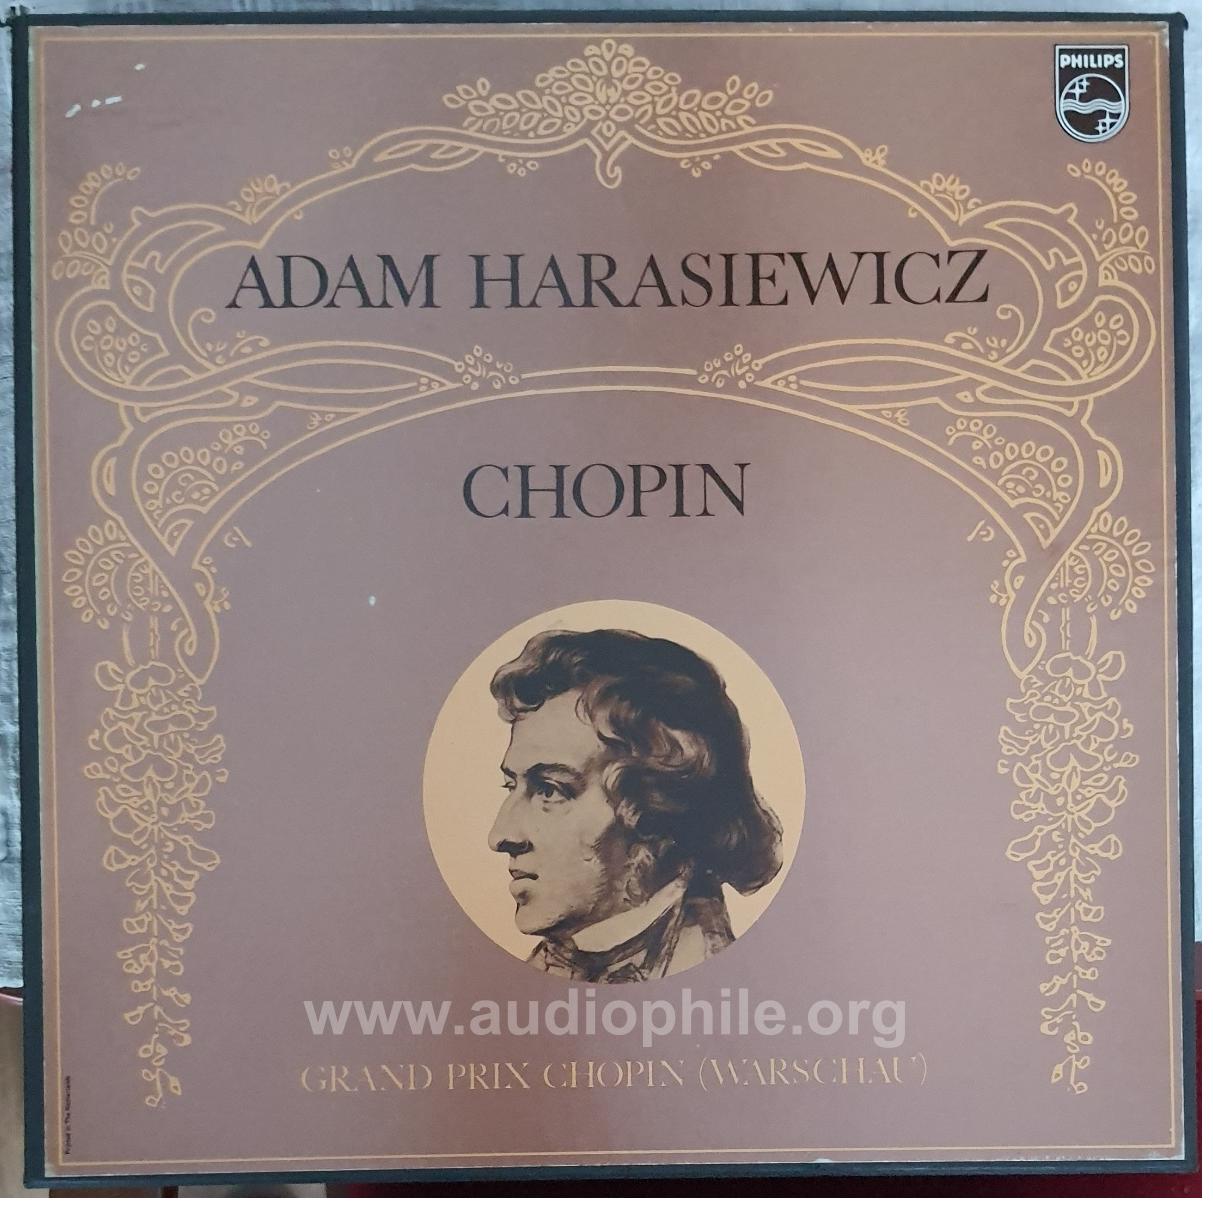 Chopin - adam harasiewicz 14 lp kutulu koleksiyon seti